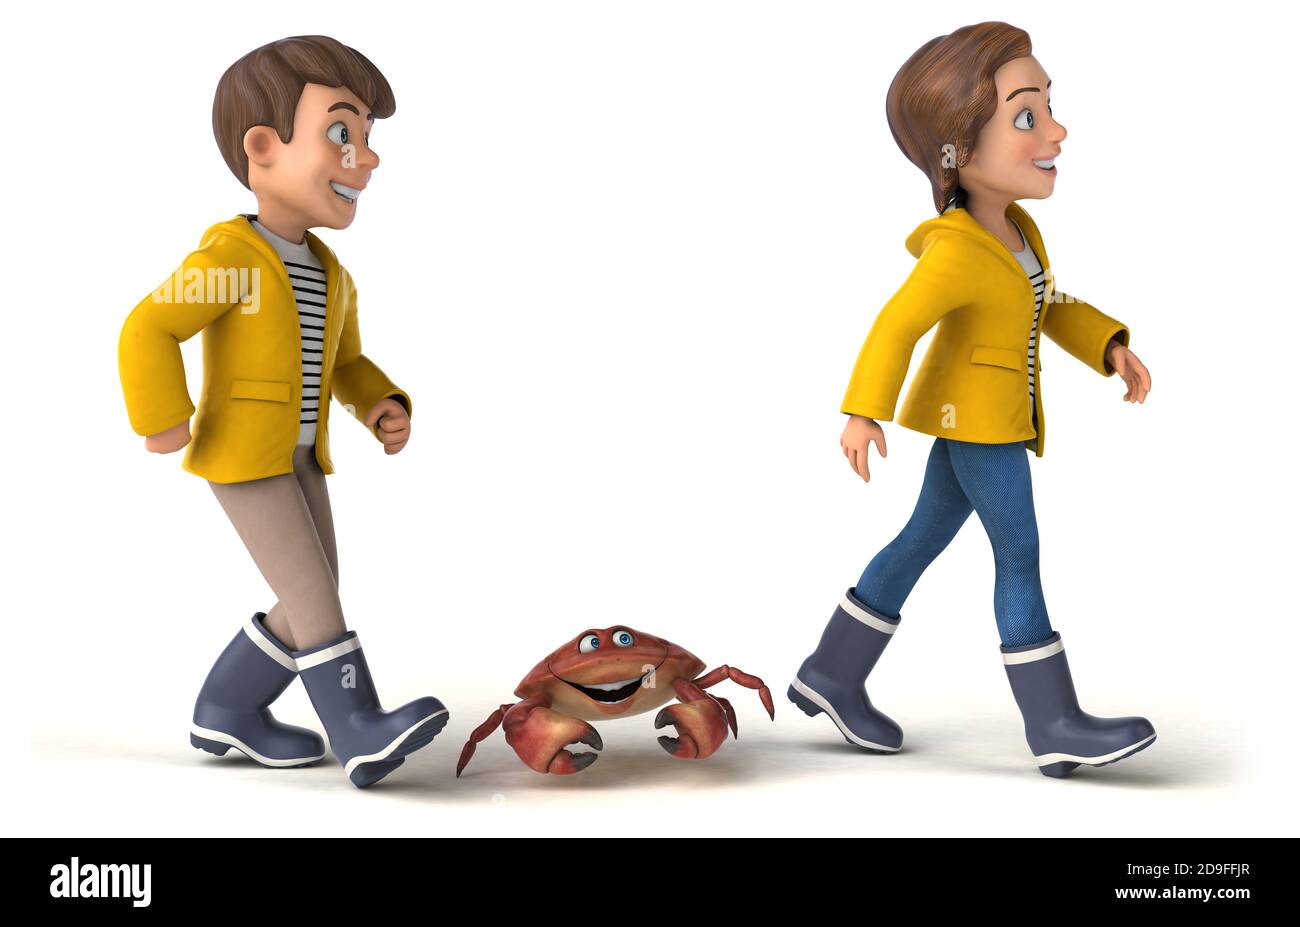 Fun 3D Illustration of cartoon kids with a crab Stock Photo - Alamy